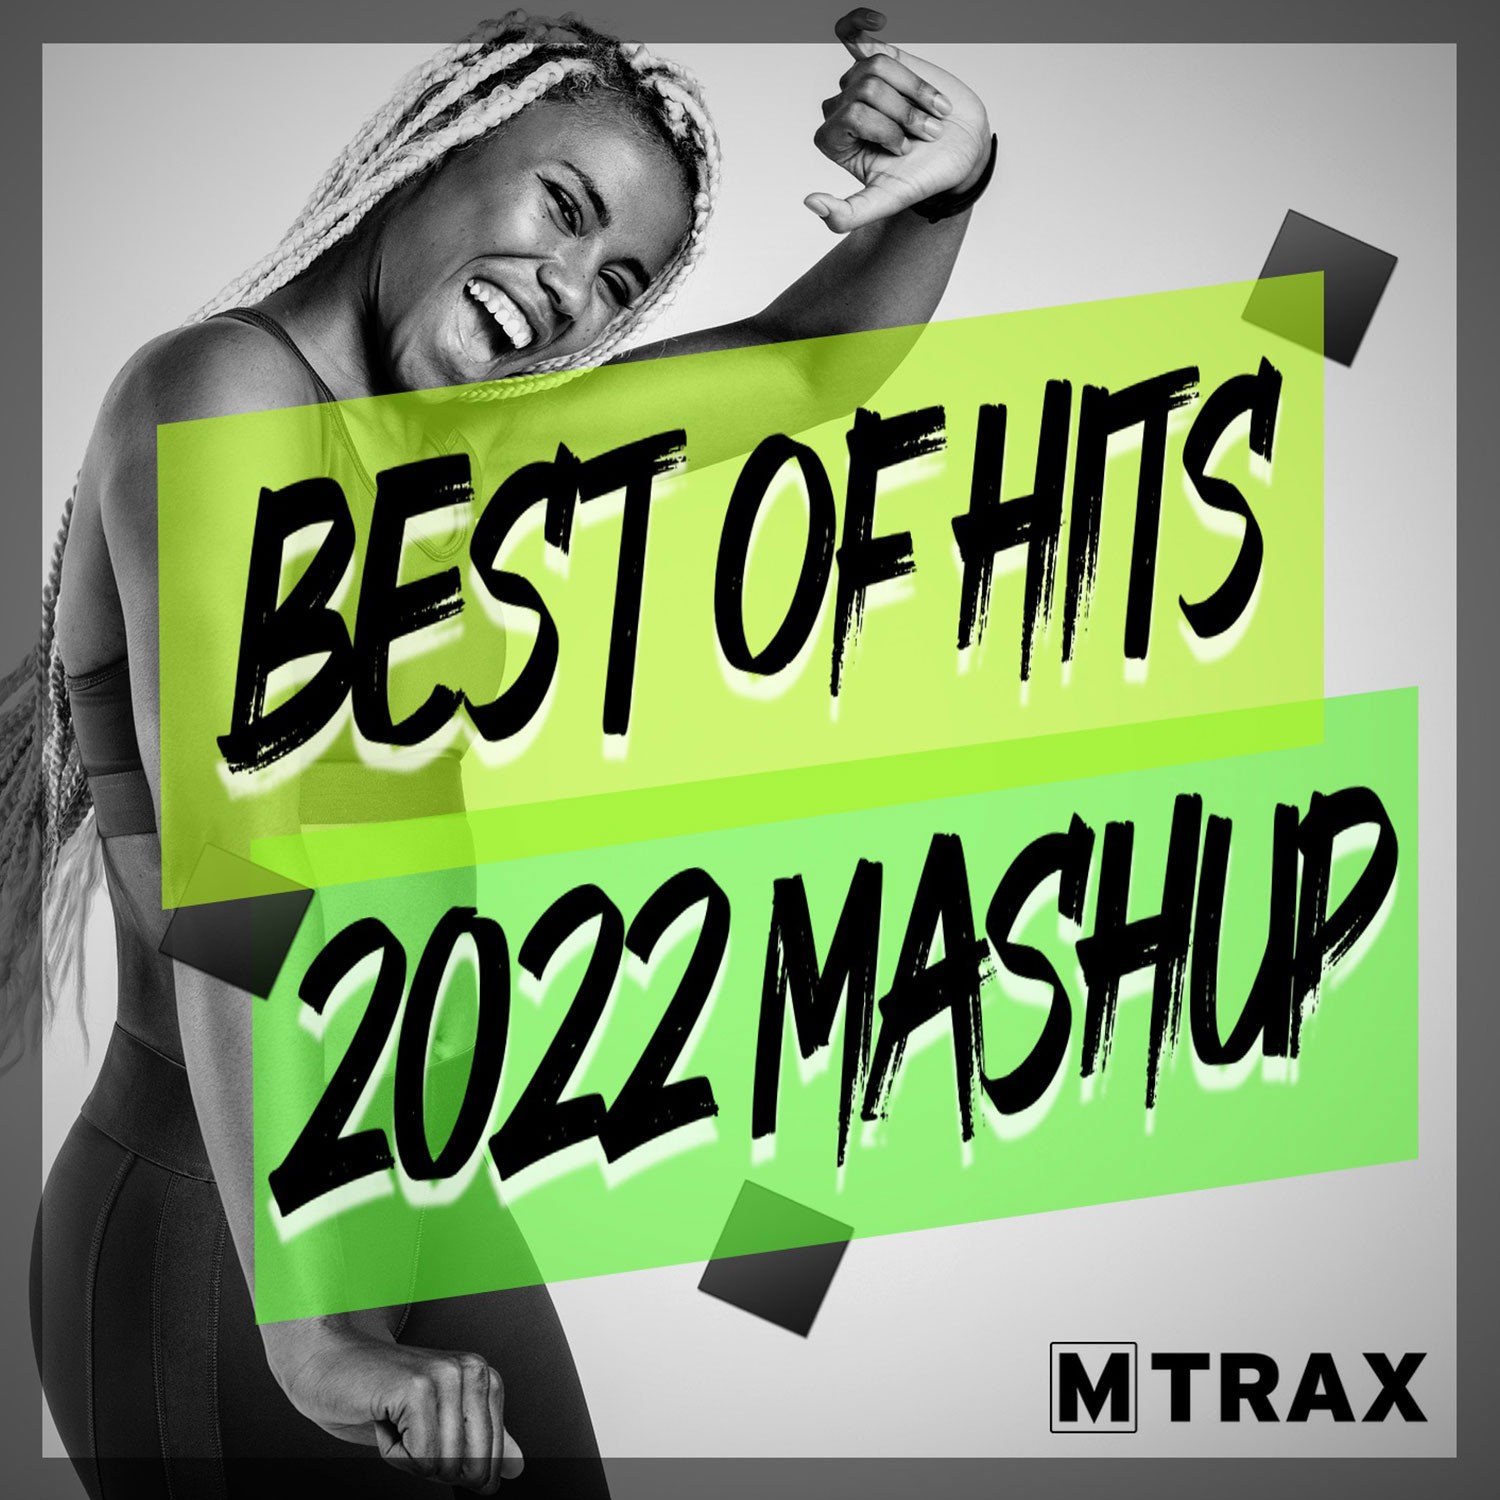 Best of Hits 2022 Mashup